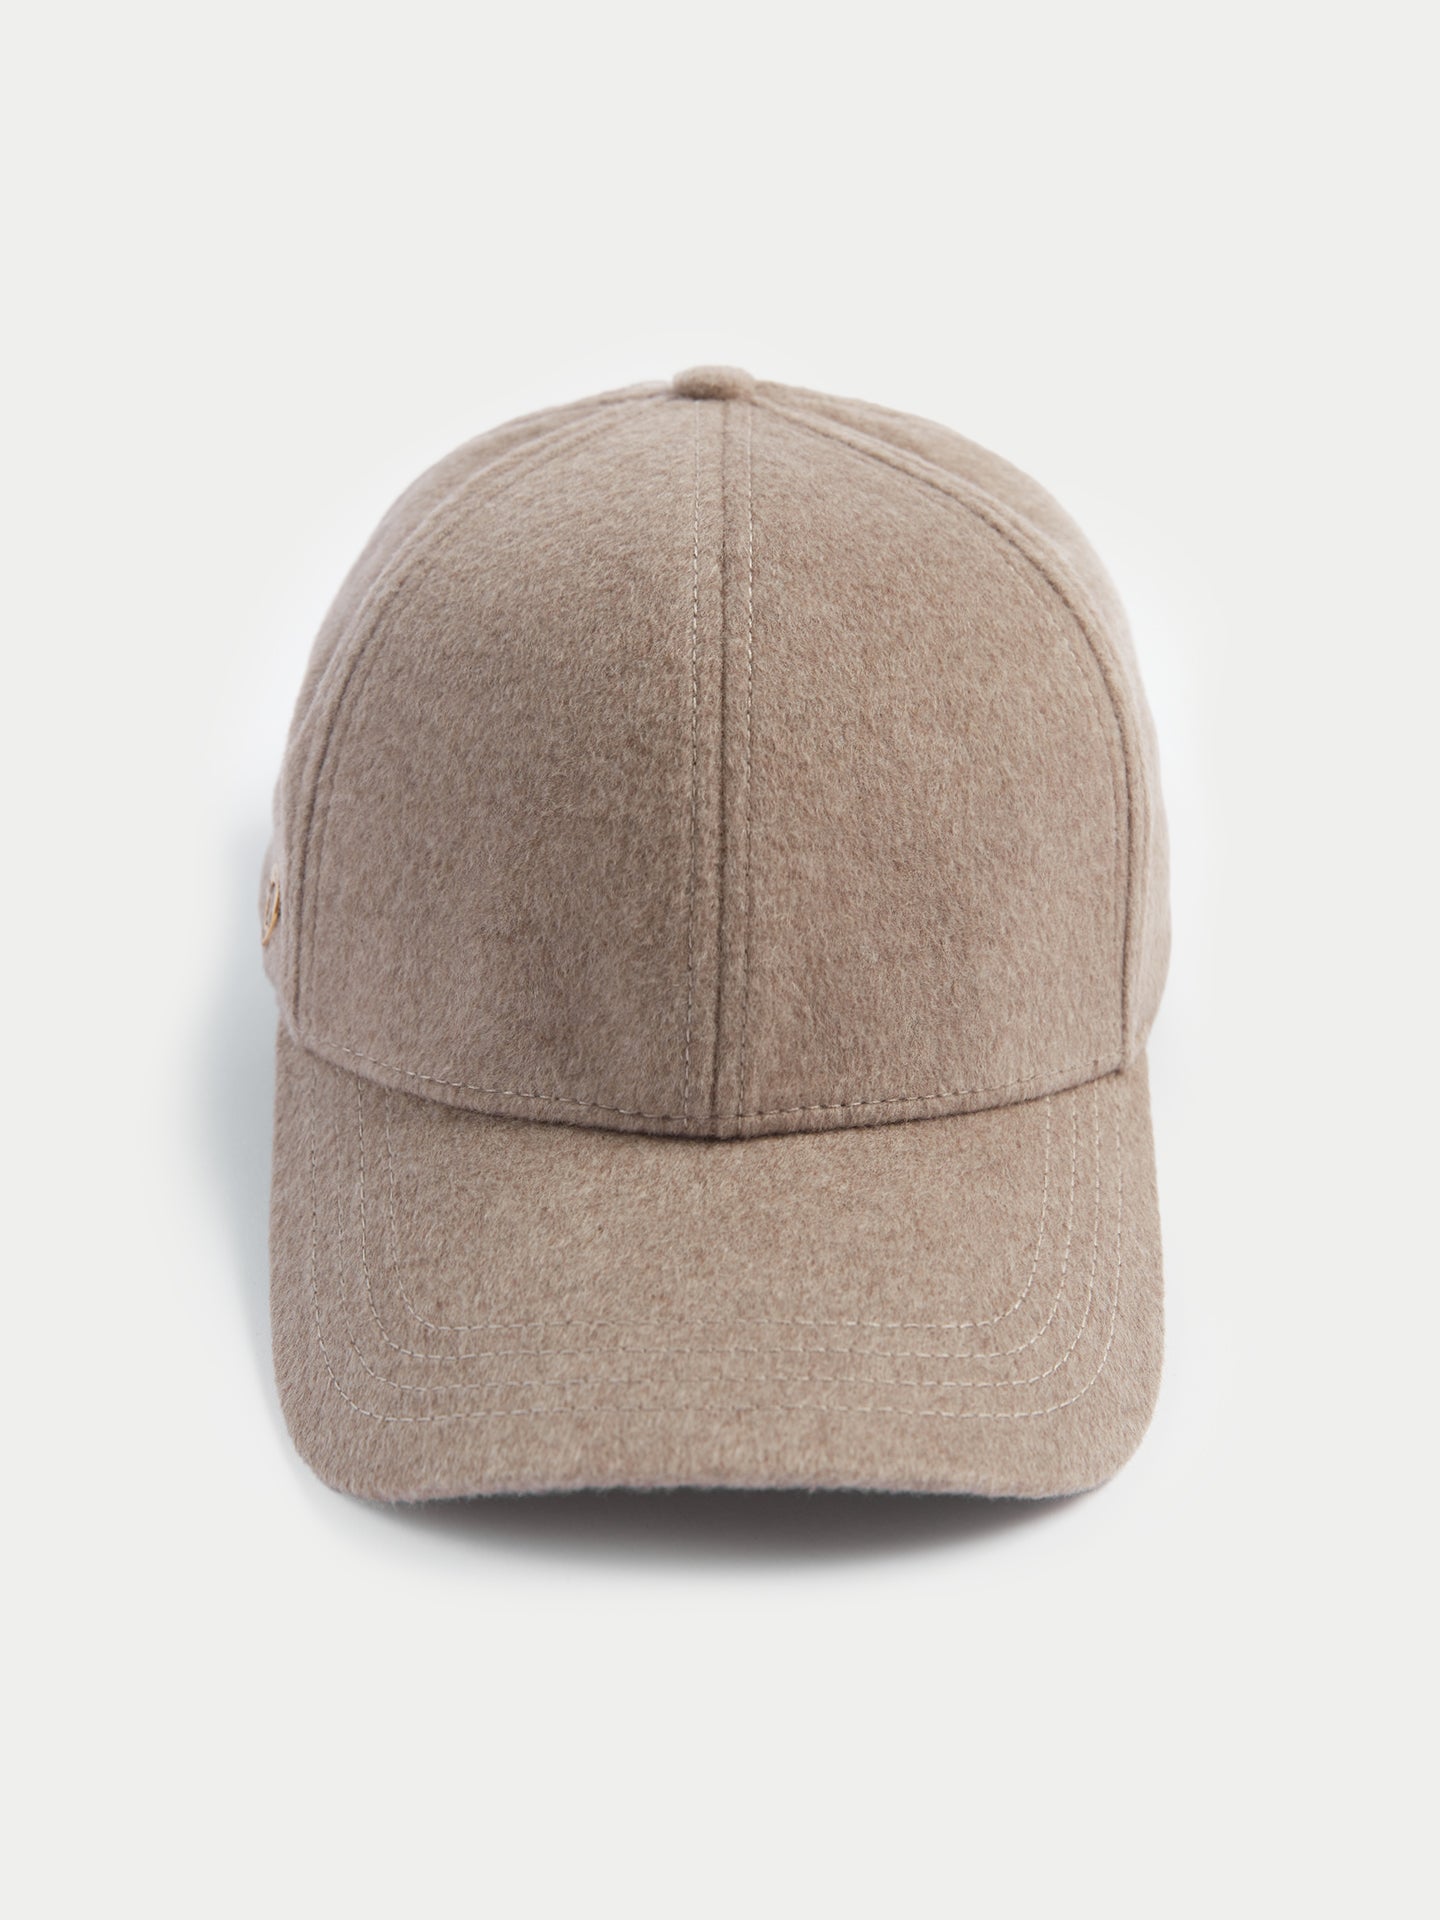 GOBI Cashmere - Cashmere Accessories - Cashmere Hat - Cashmere Cap